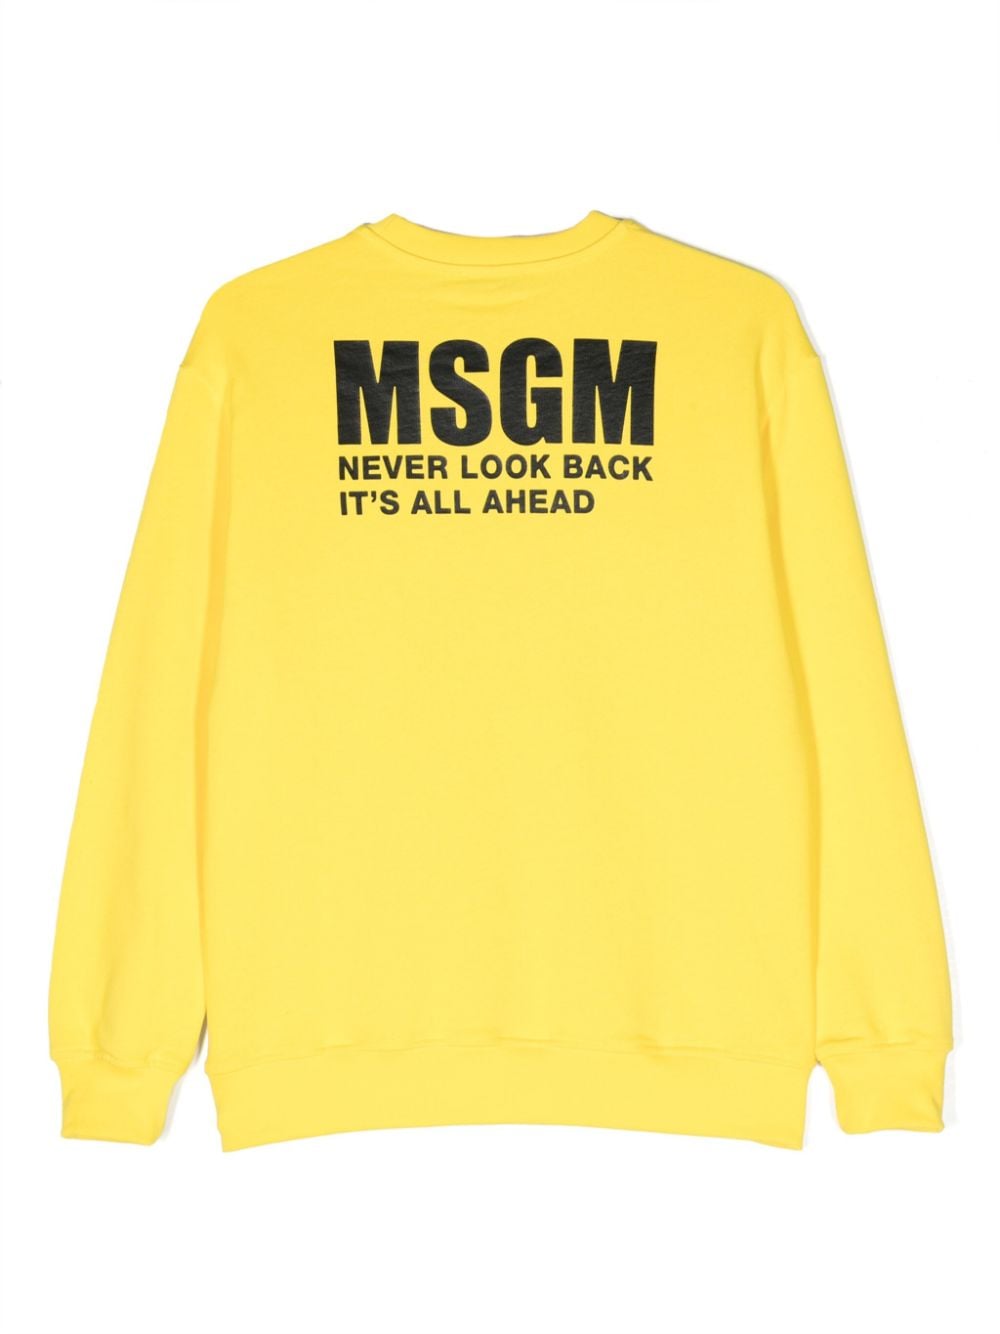 Yellow sweatshirt for children with logo